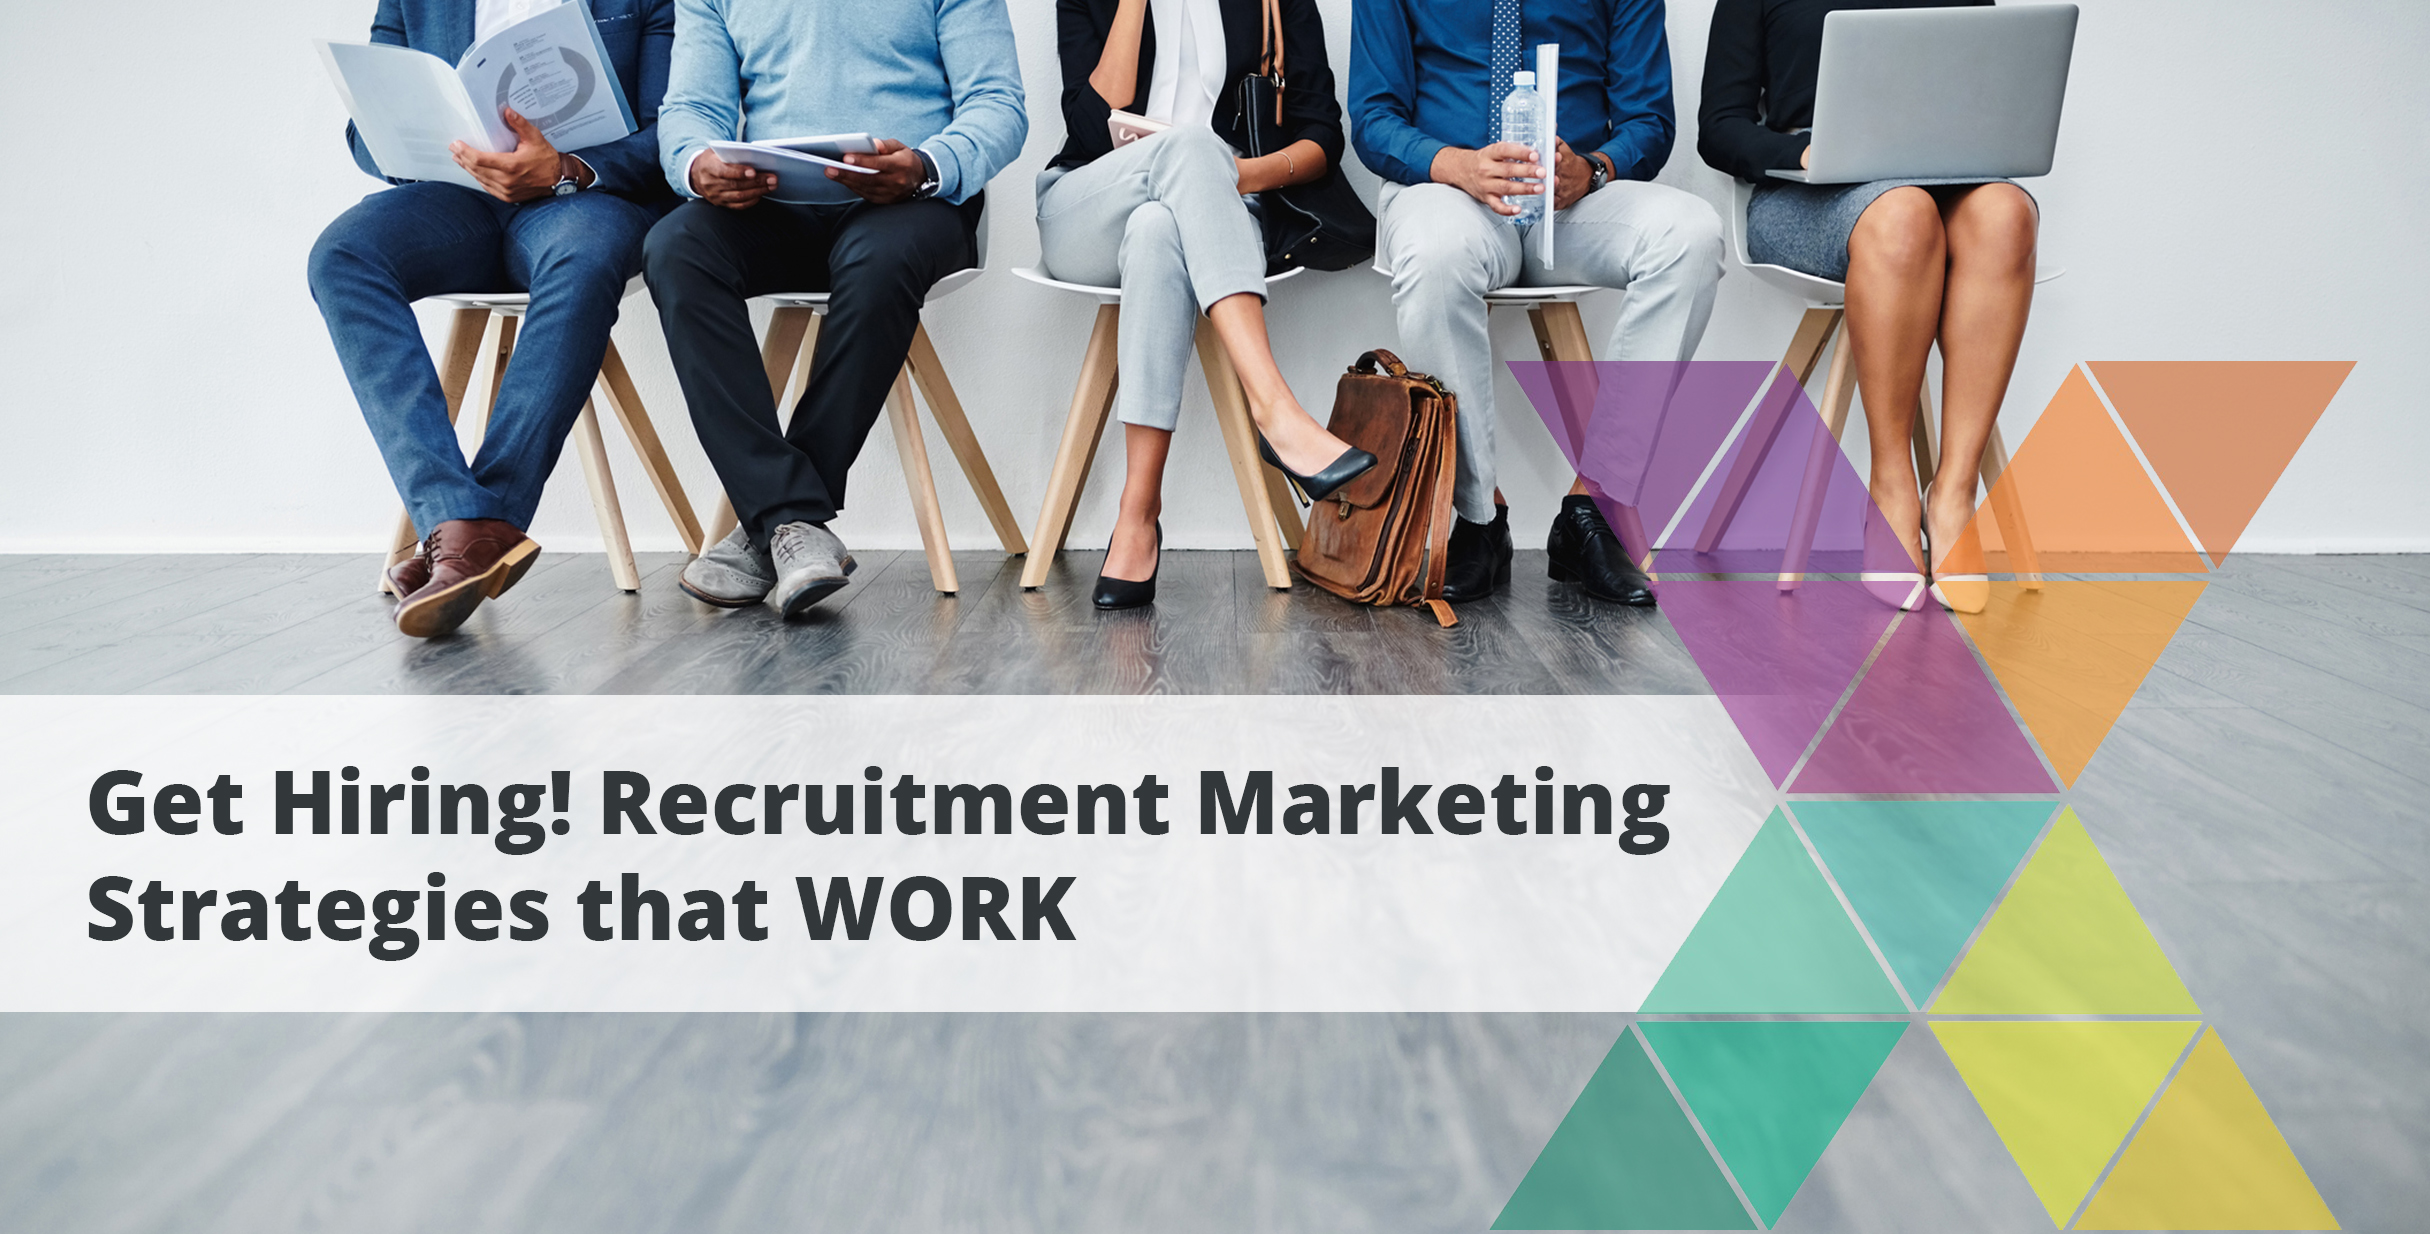 Recruitment-Marketing-Strategies-that-WORK.jpg